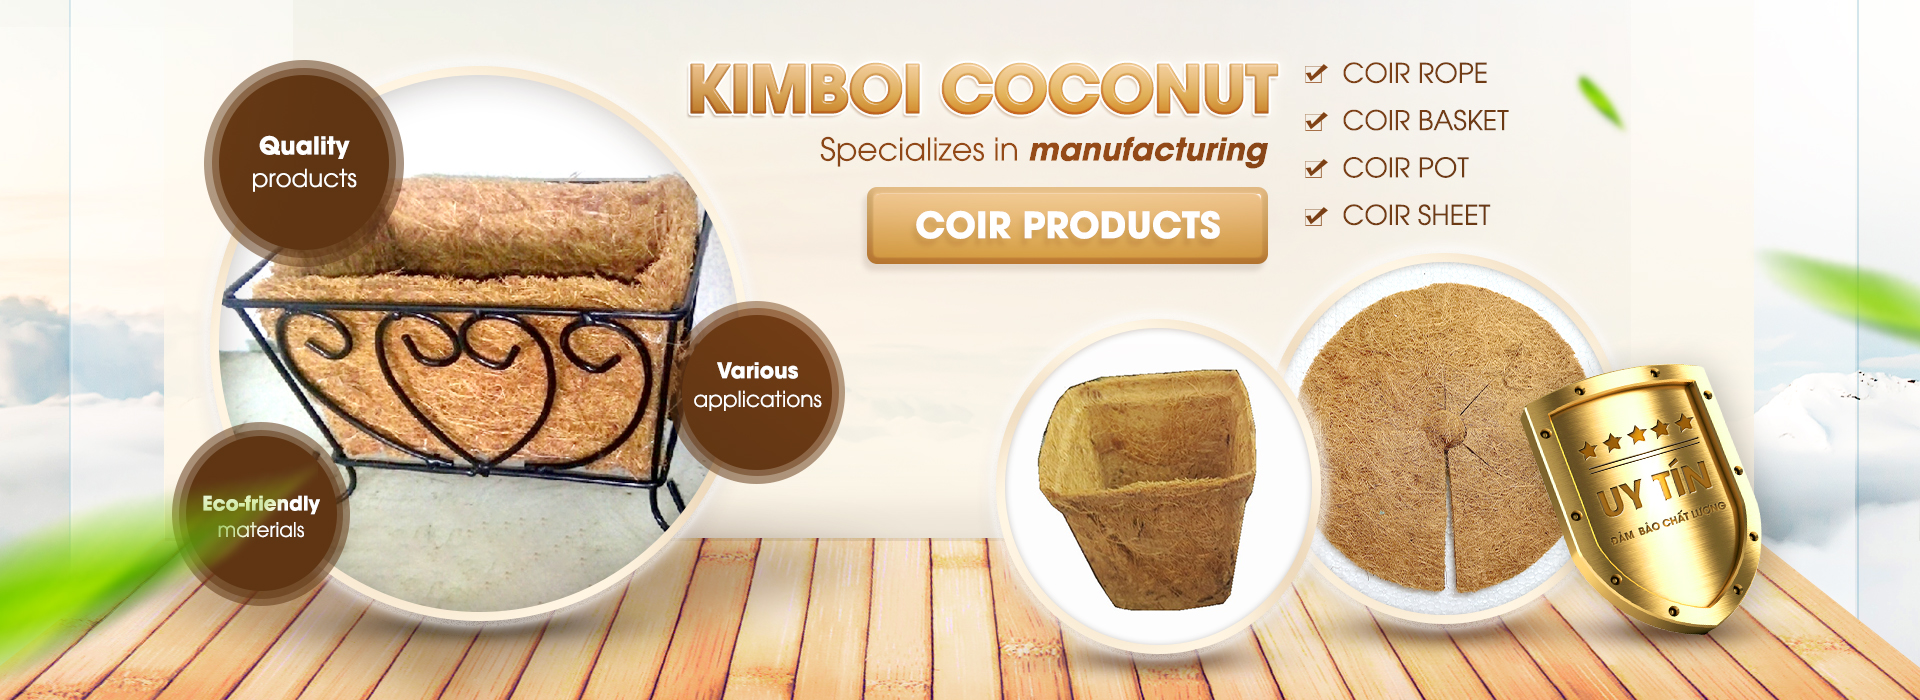 KIMBOI COCONUT CO., LTD